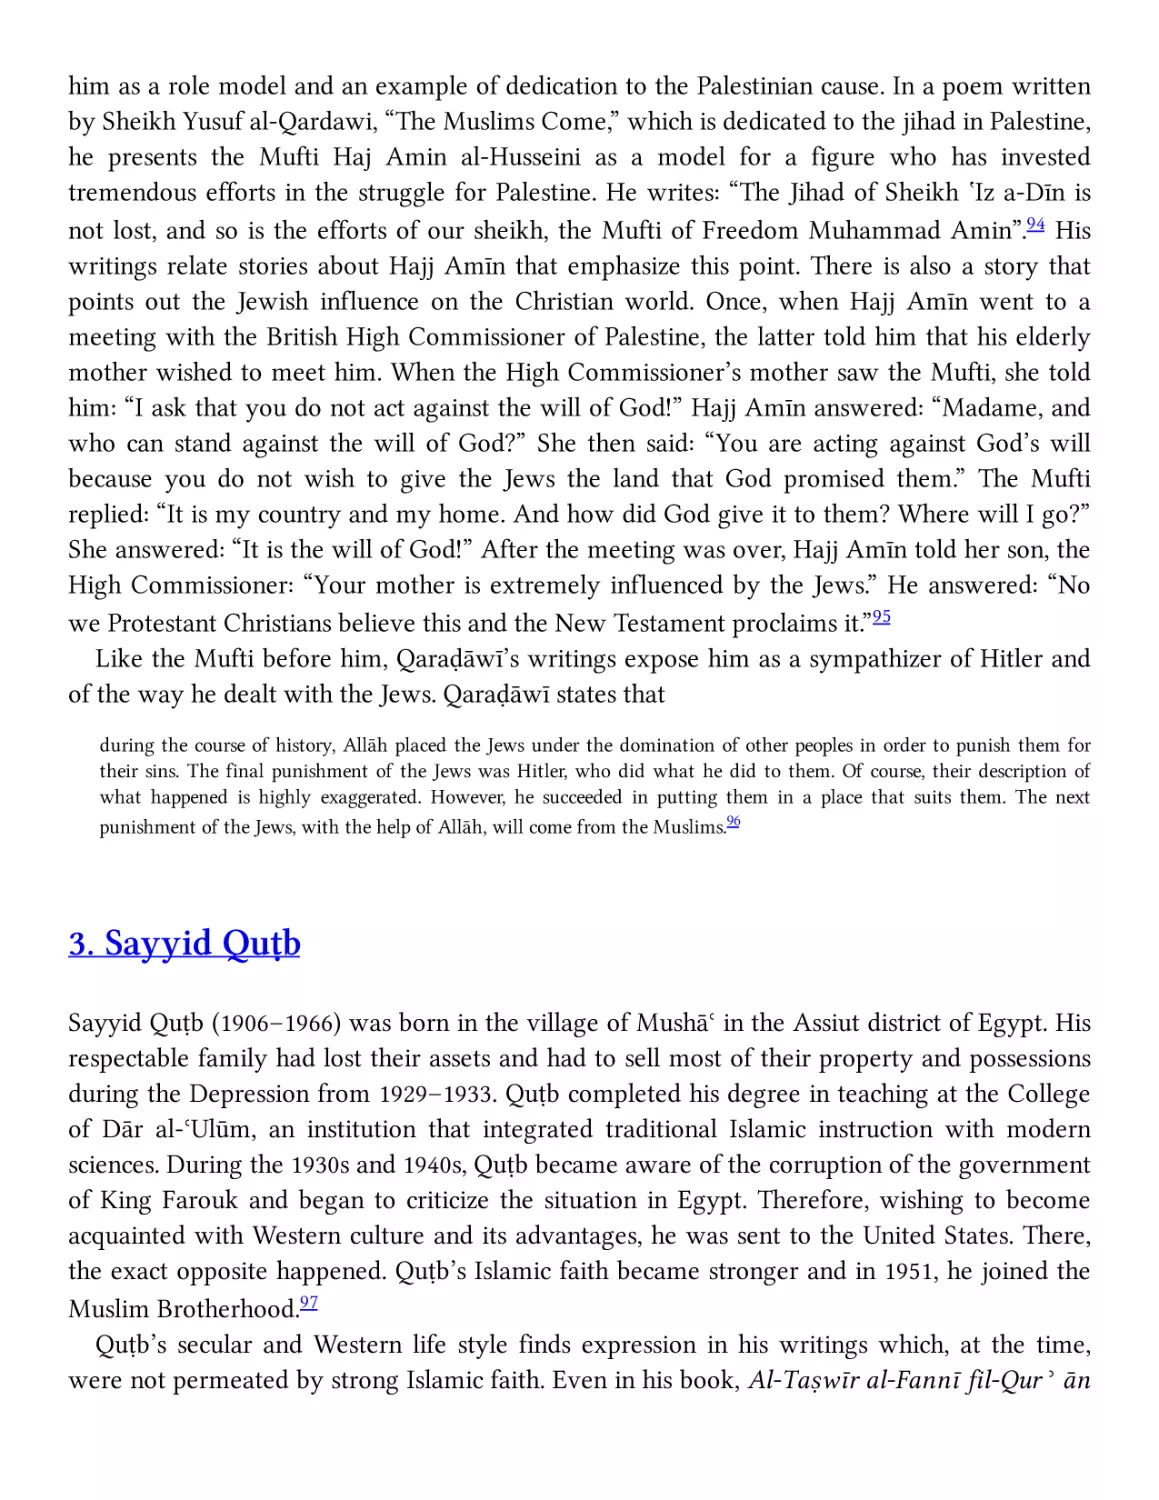 3. Sayyid Quṭb